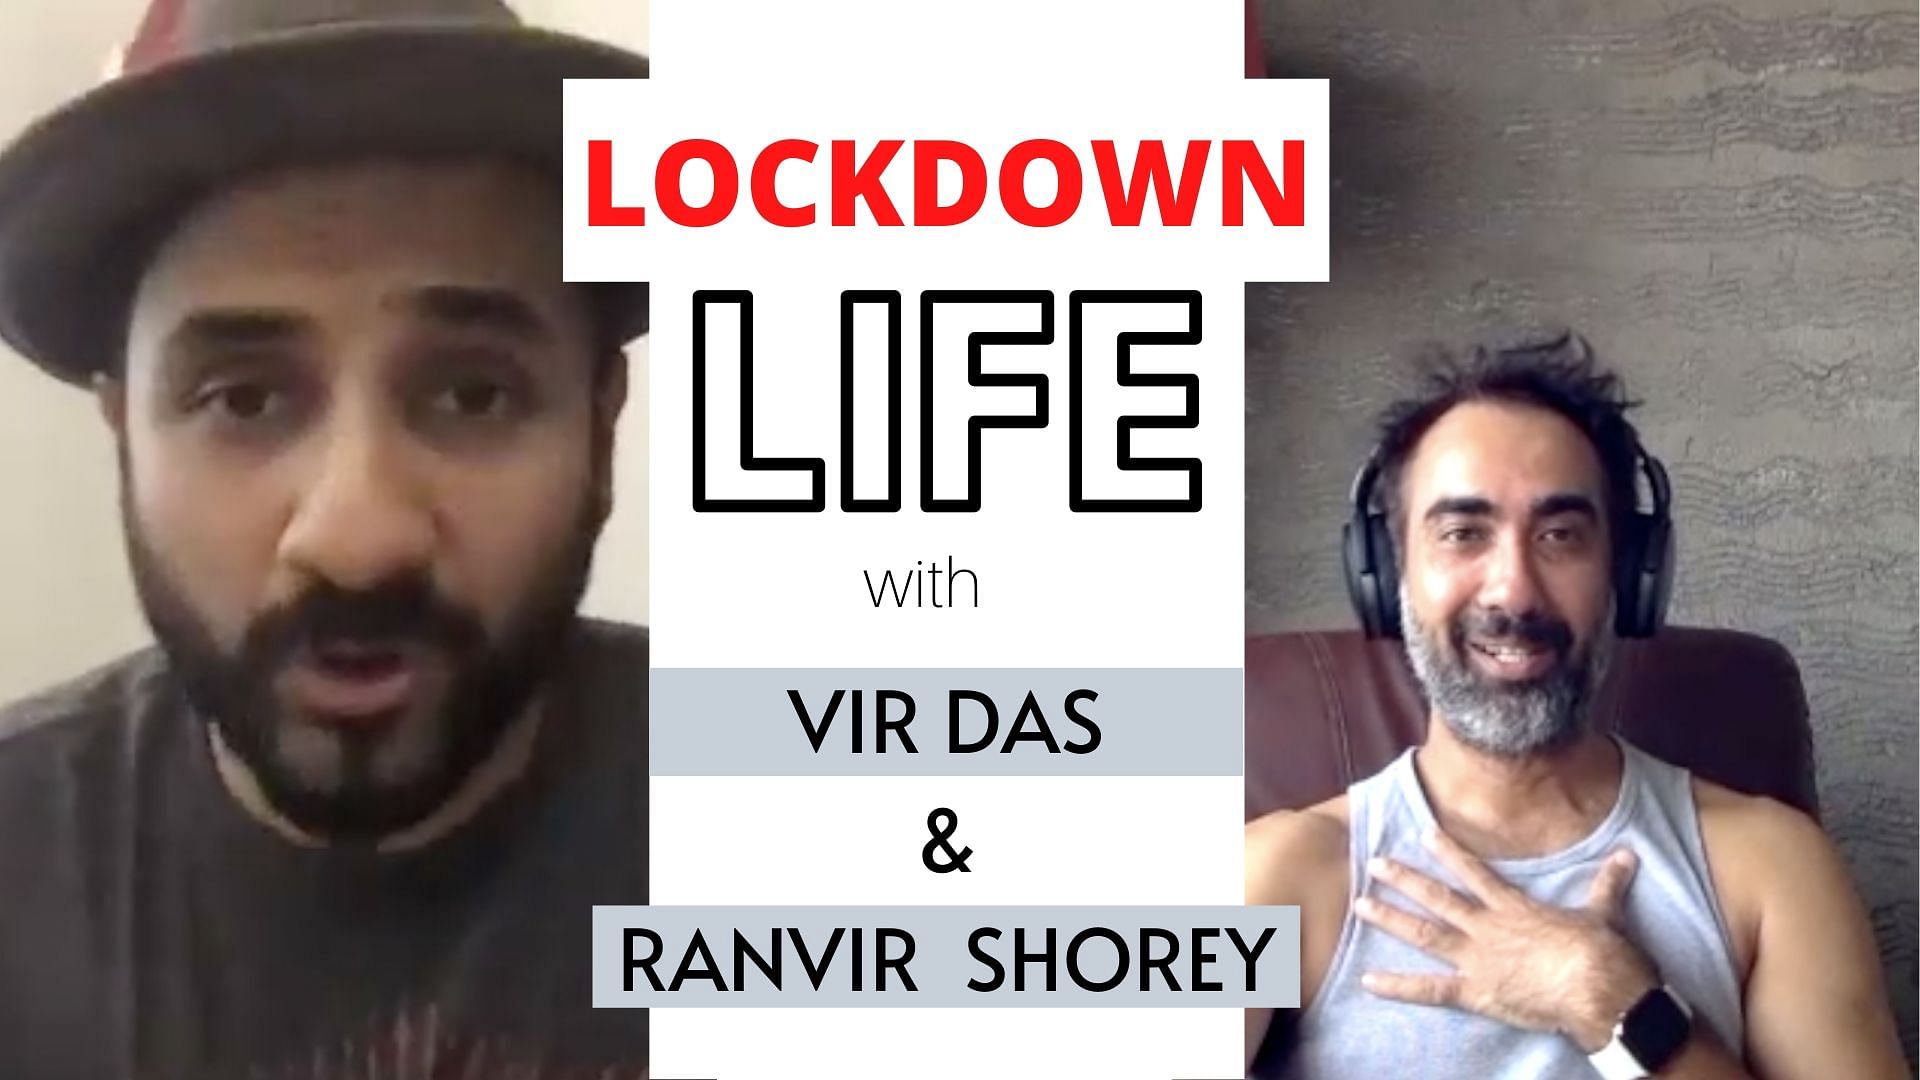 A video chat with Vir Das and Ranvir Shorey.